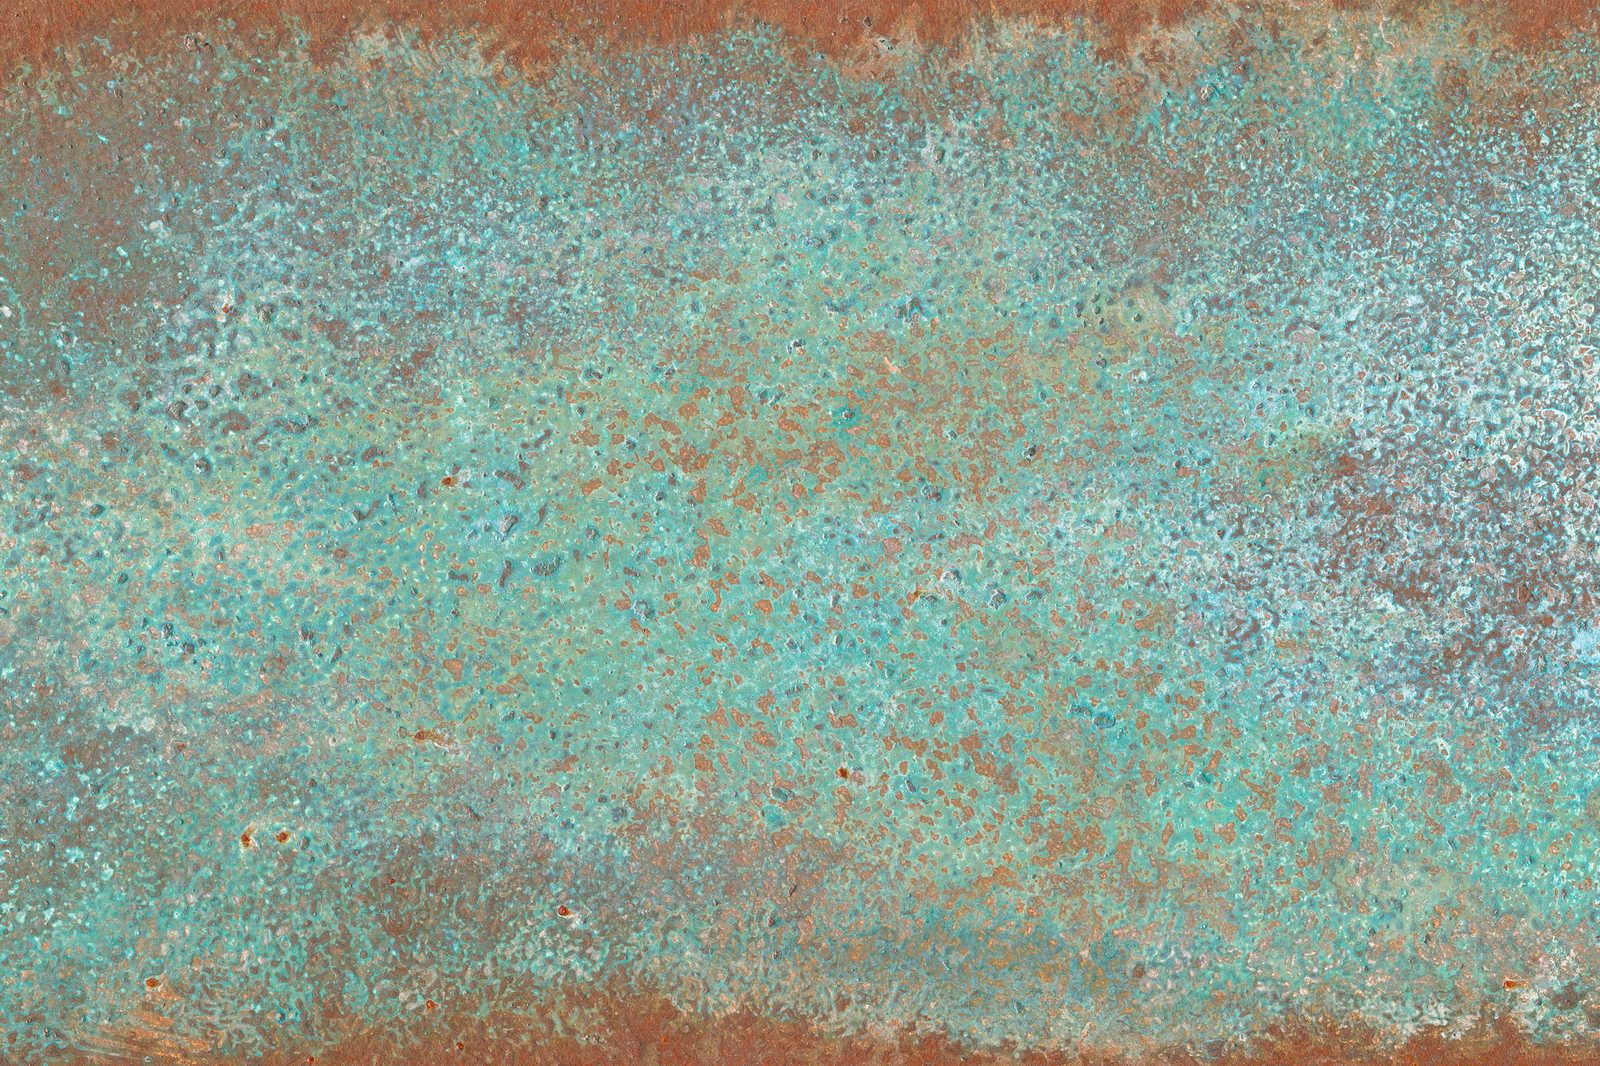             Metal Optics Canvas Schilderij Turquoise Patina met Roest - 0.90 m x 0.60 m
        